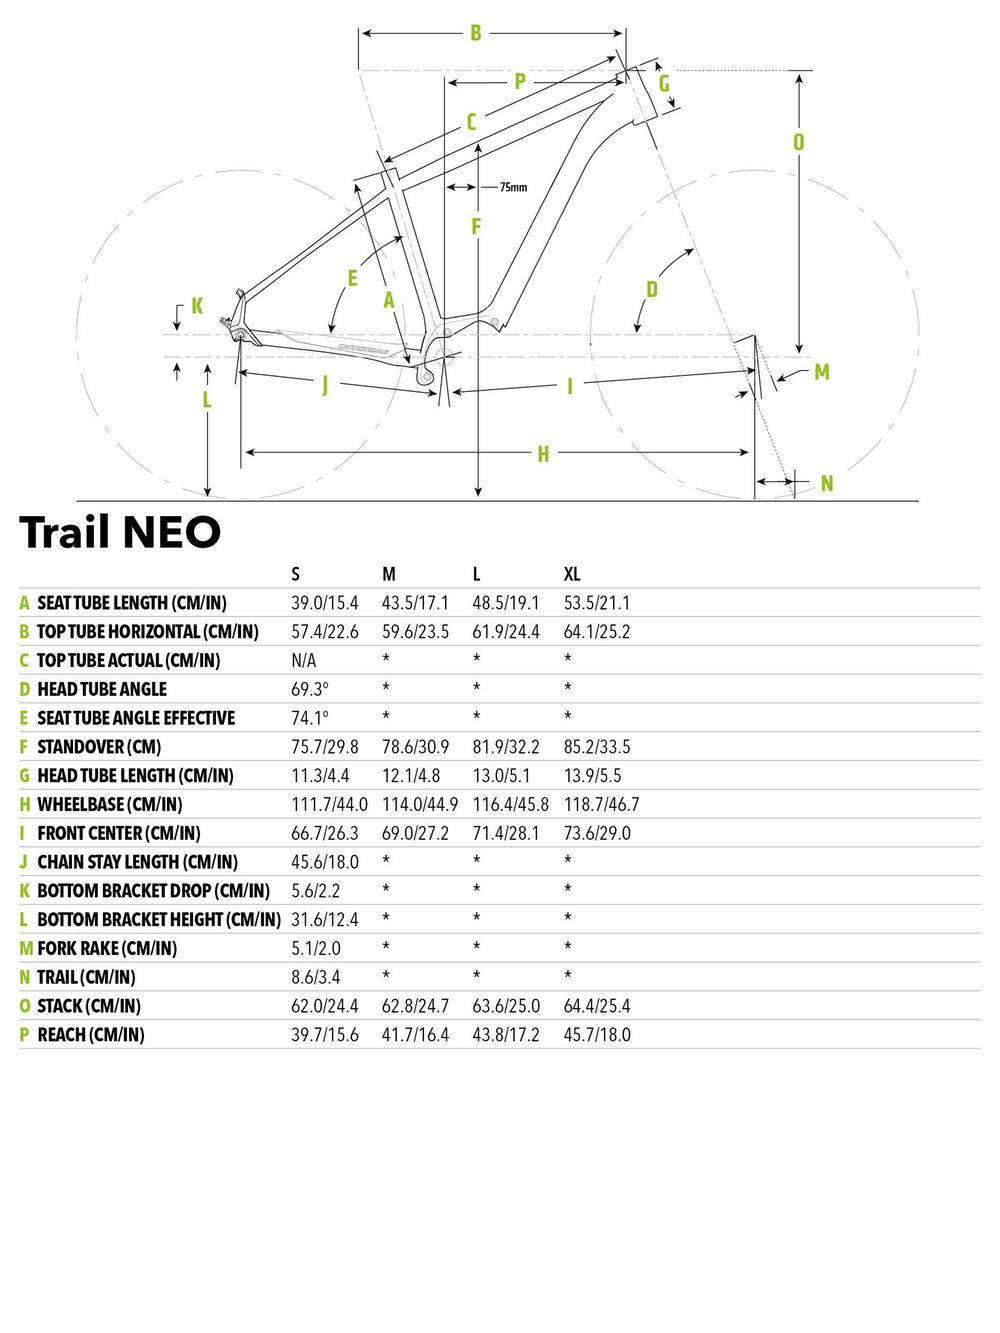 Trail Neo 1 - 